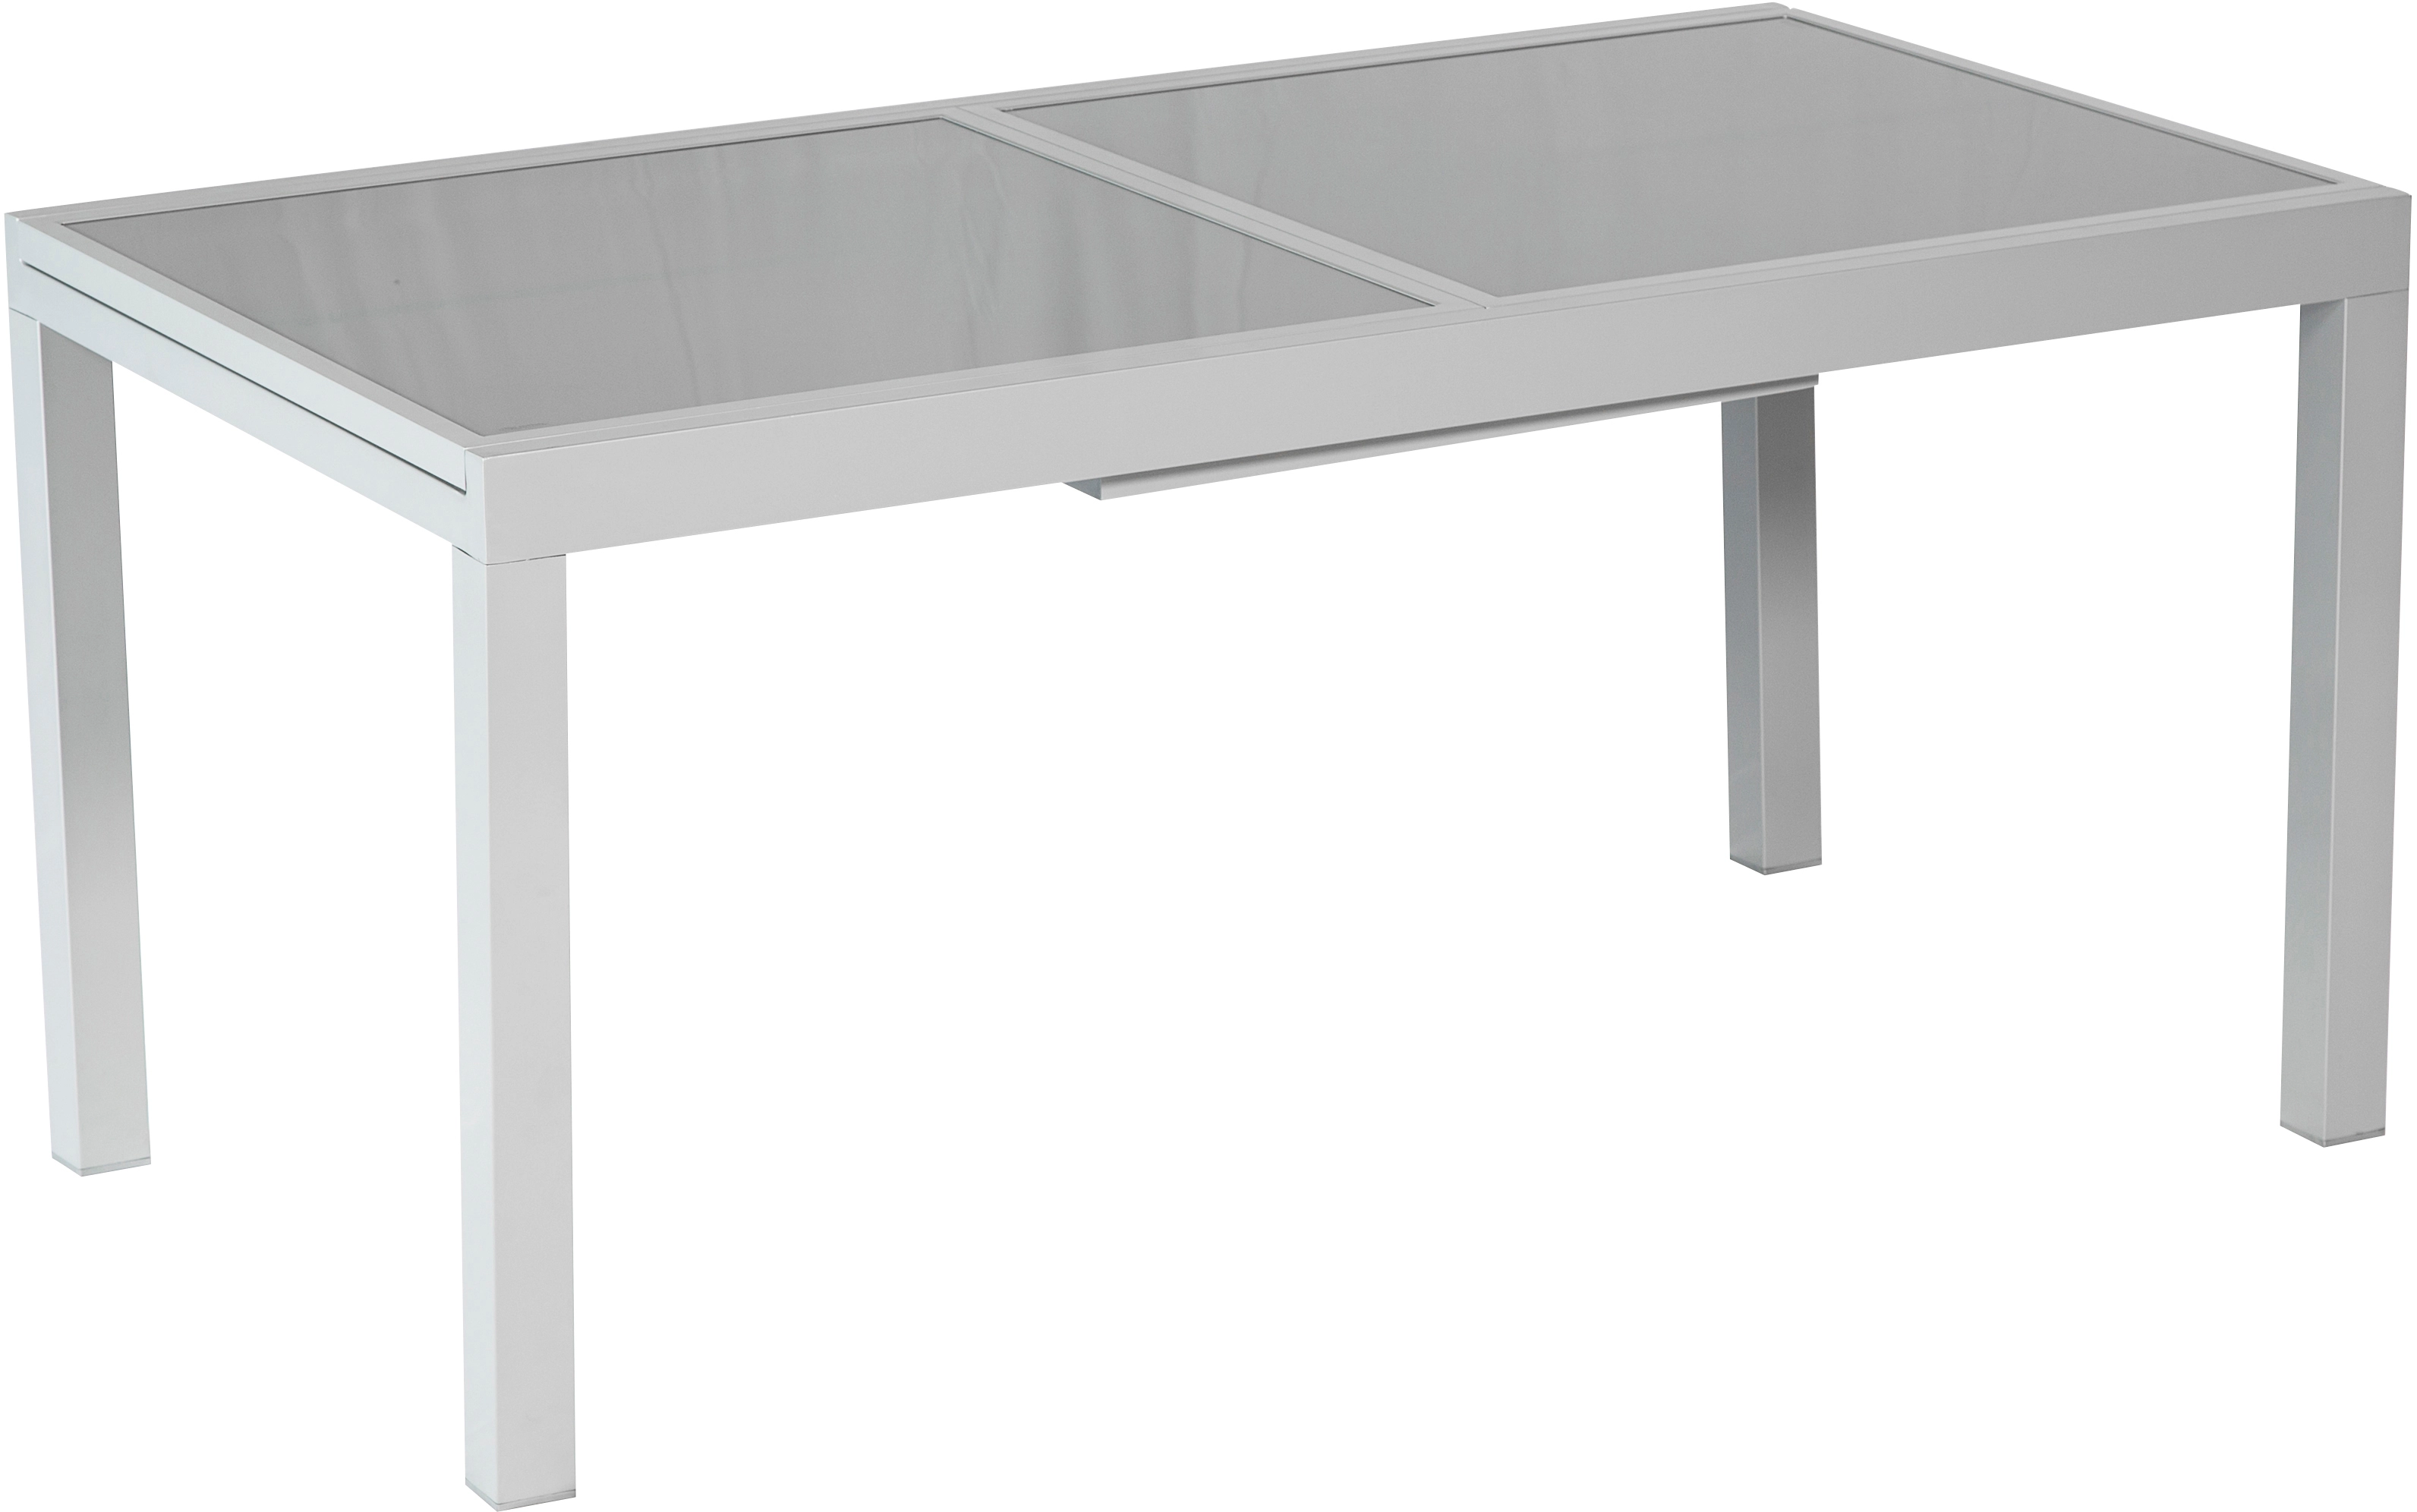 Merxx Gartentisch Rechteckig Aluminium Grau Ausziehbar 120/180 cm x 90 cm